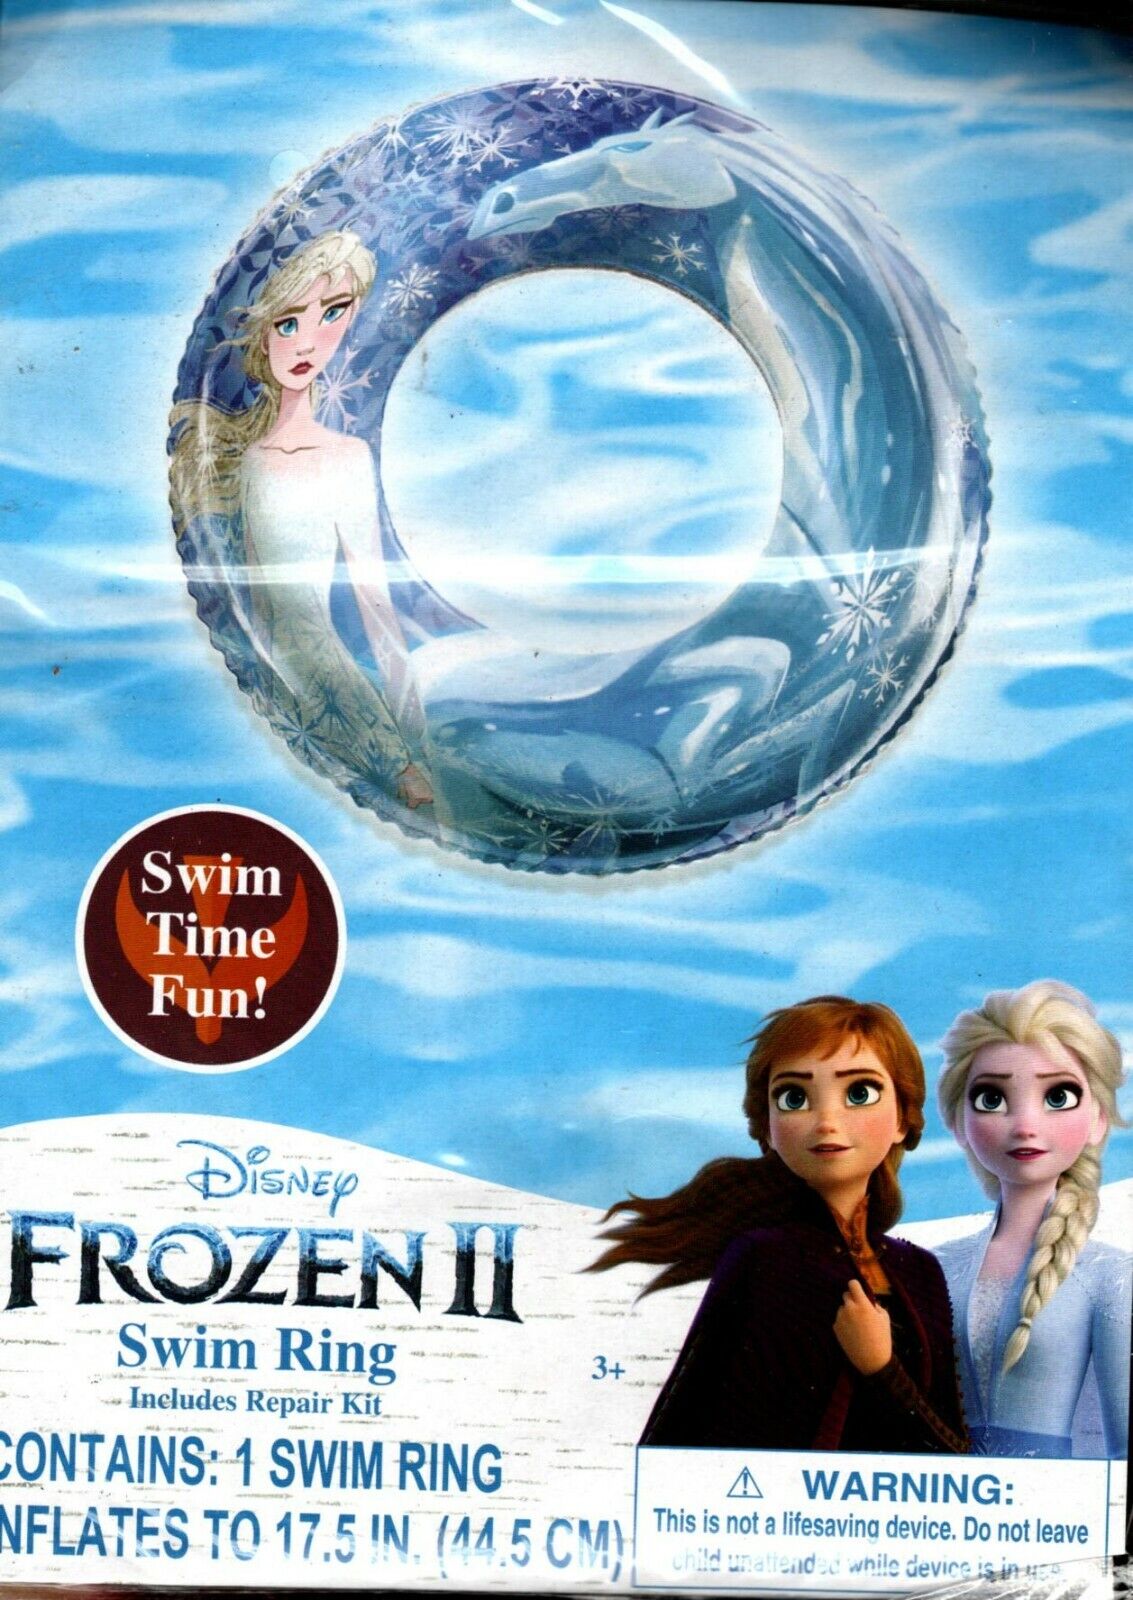 Disney Frozen Swim Ring 17.5in Includes Repair Kit - Swim Time Fun!